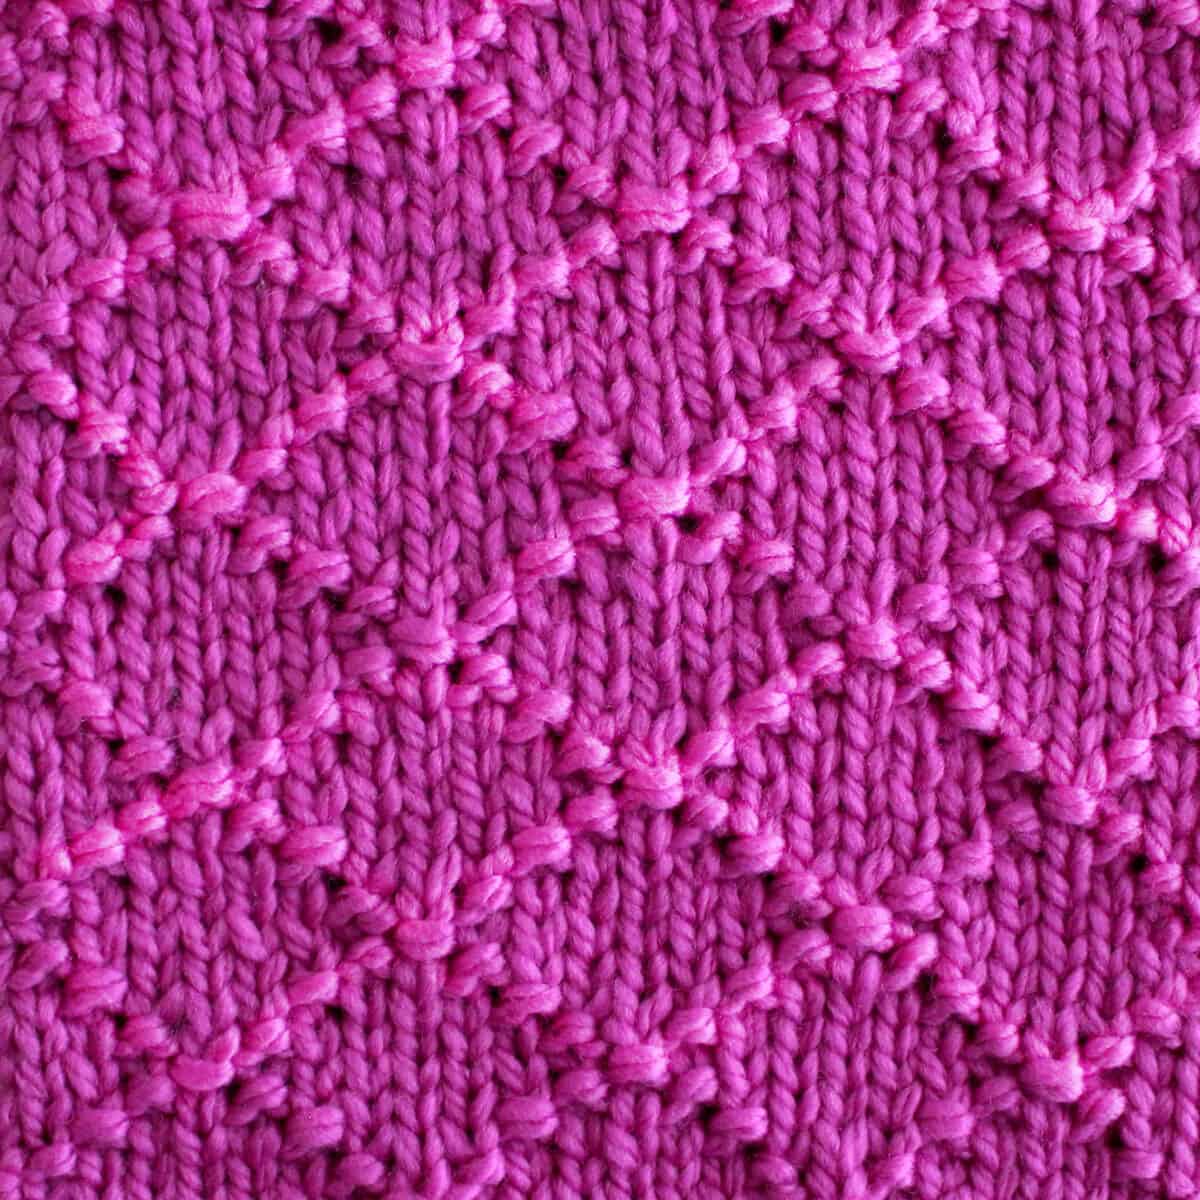 Diamond Brocade Knit Stitch Pattern texture in purple color yarn.